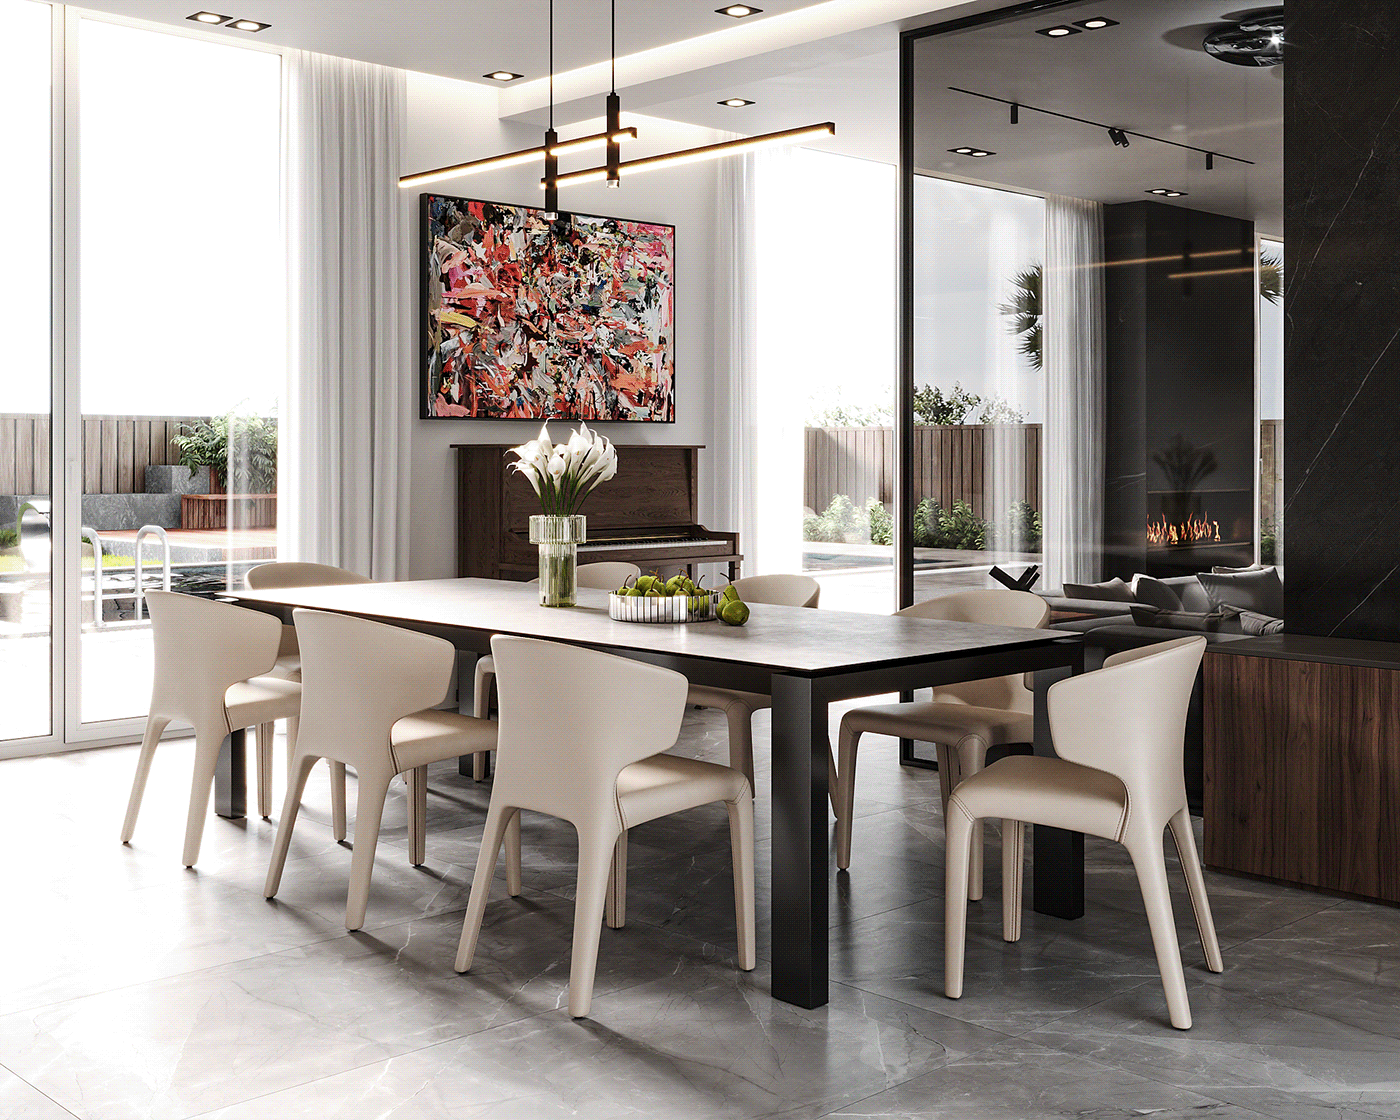 dining reception living room kitchen visualization light light design beige interior gray design